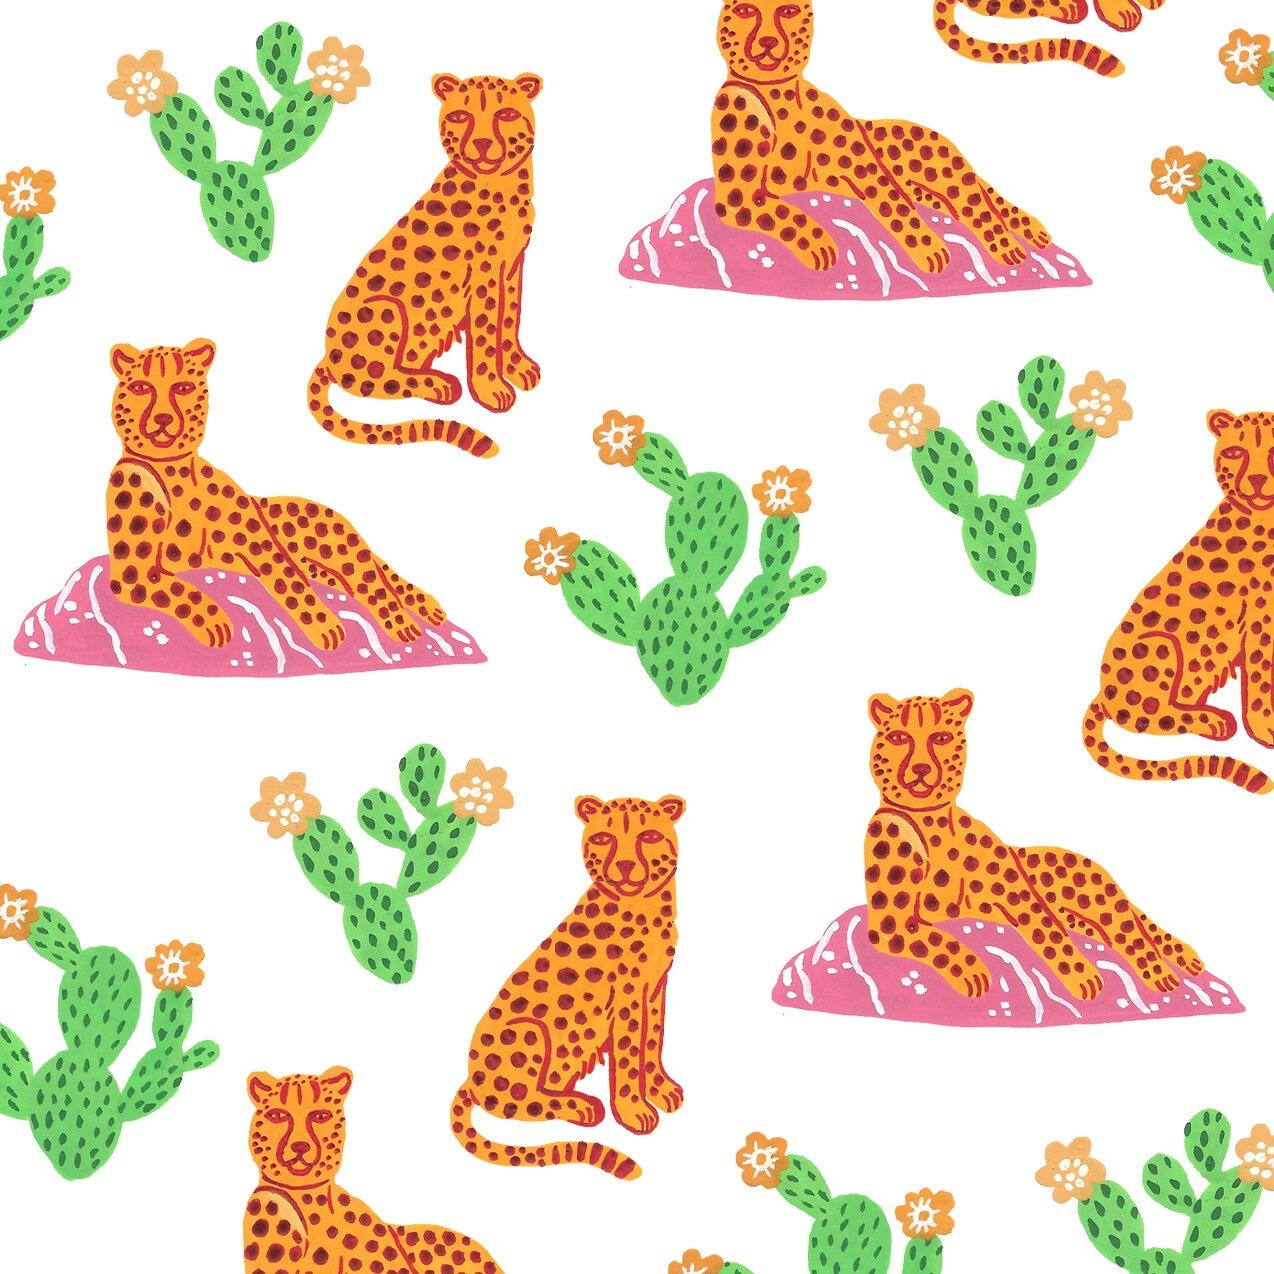 cheetah_pattern.jpg